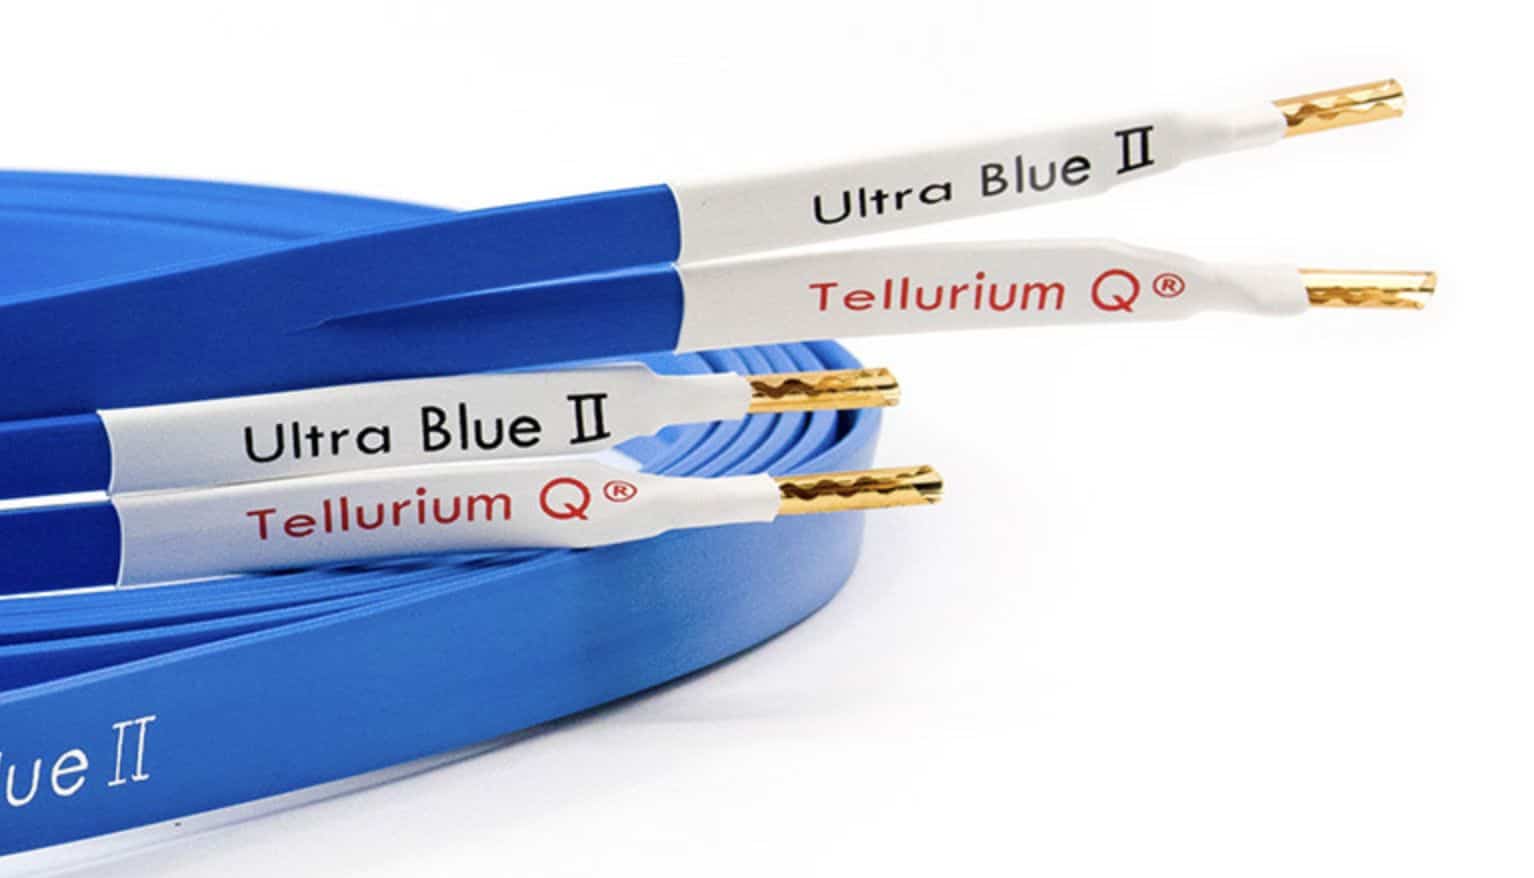 Ultra Blue II Speaker Cables From Tellurium Q